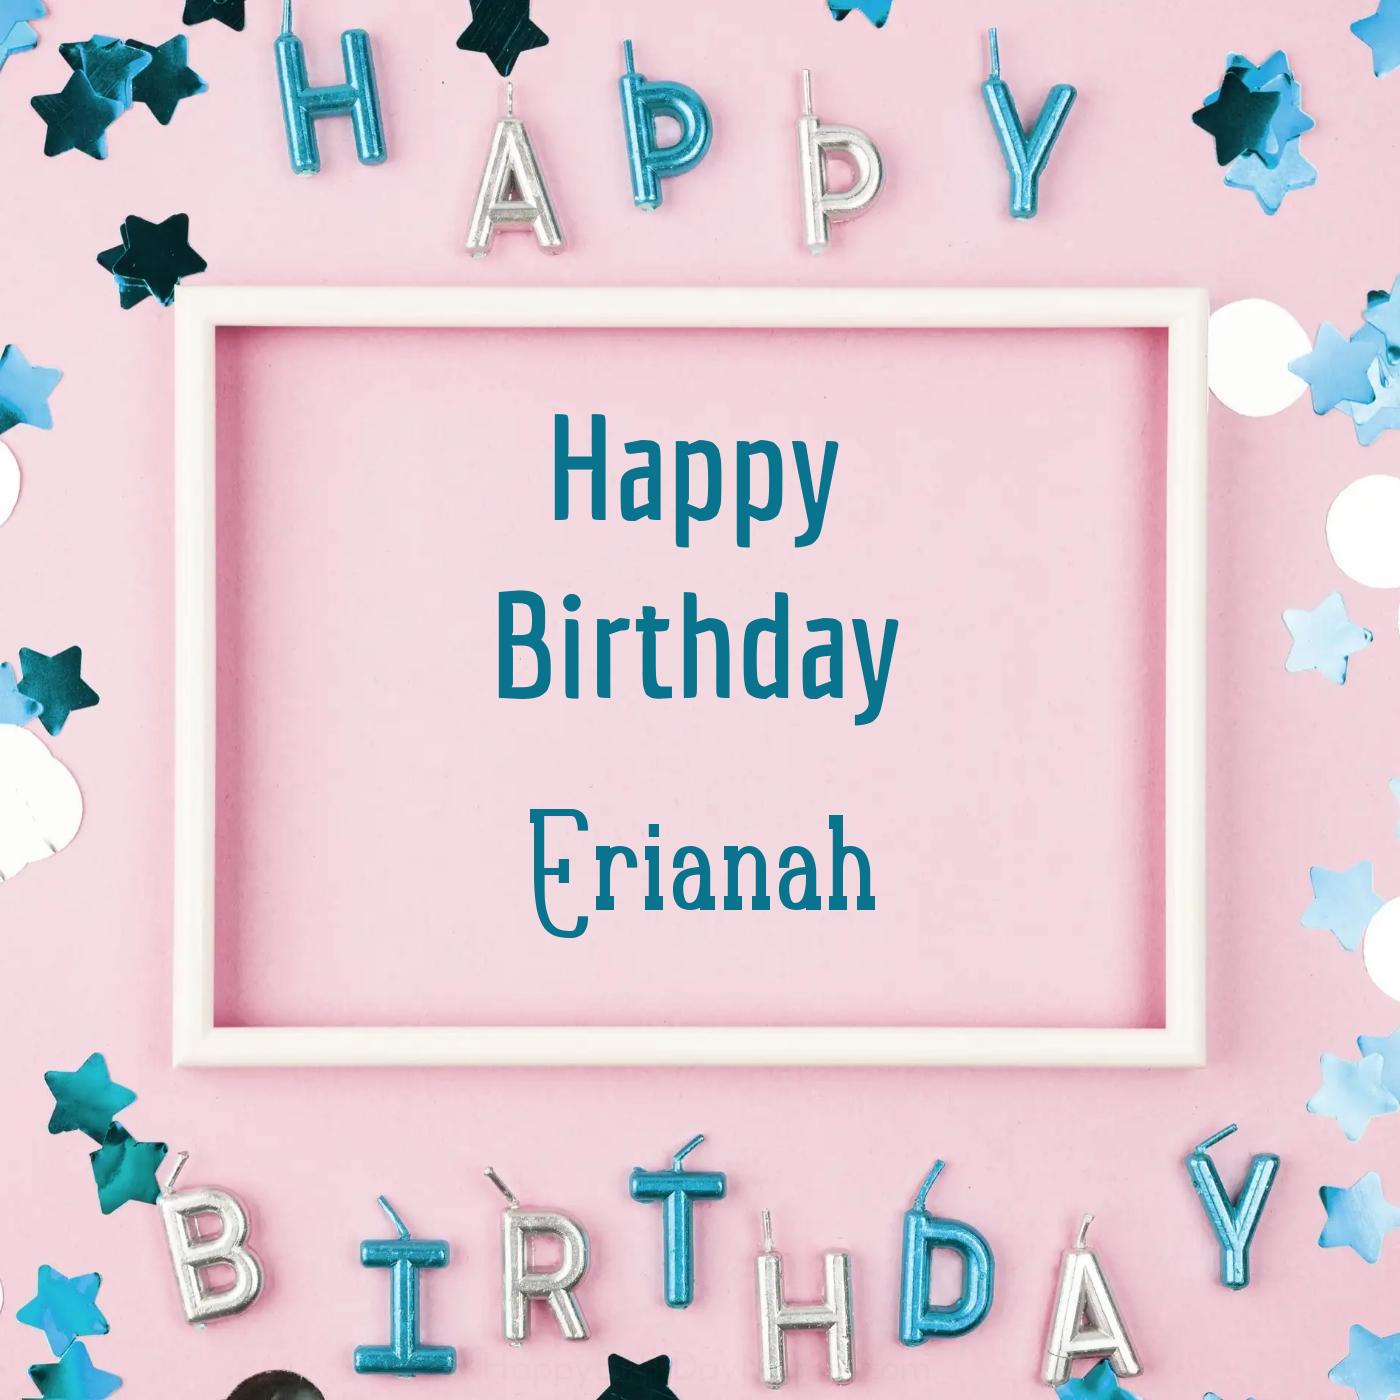 Happy Birthday Erianah Pink Frame Card